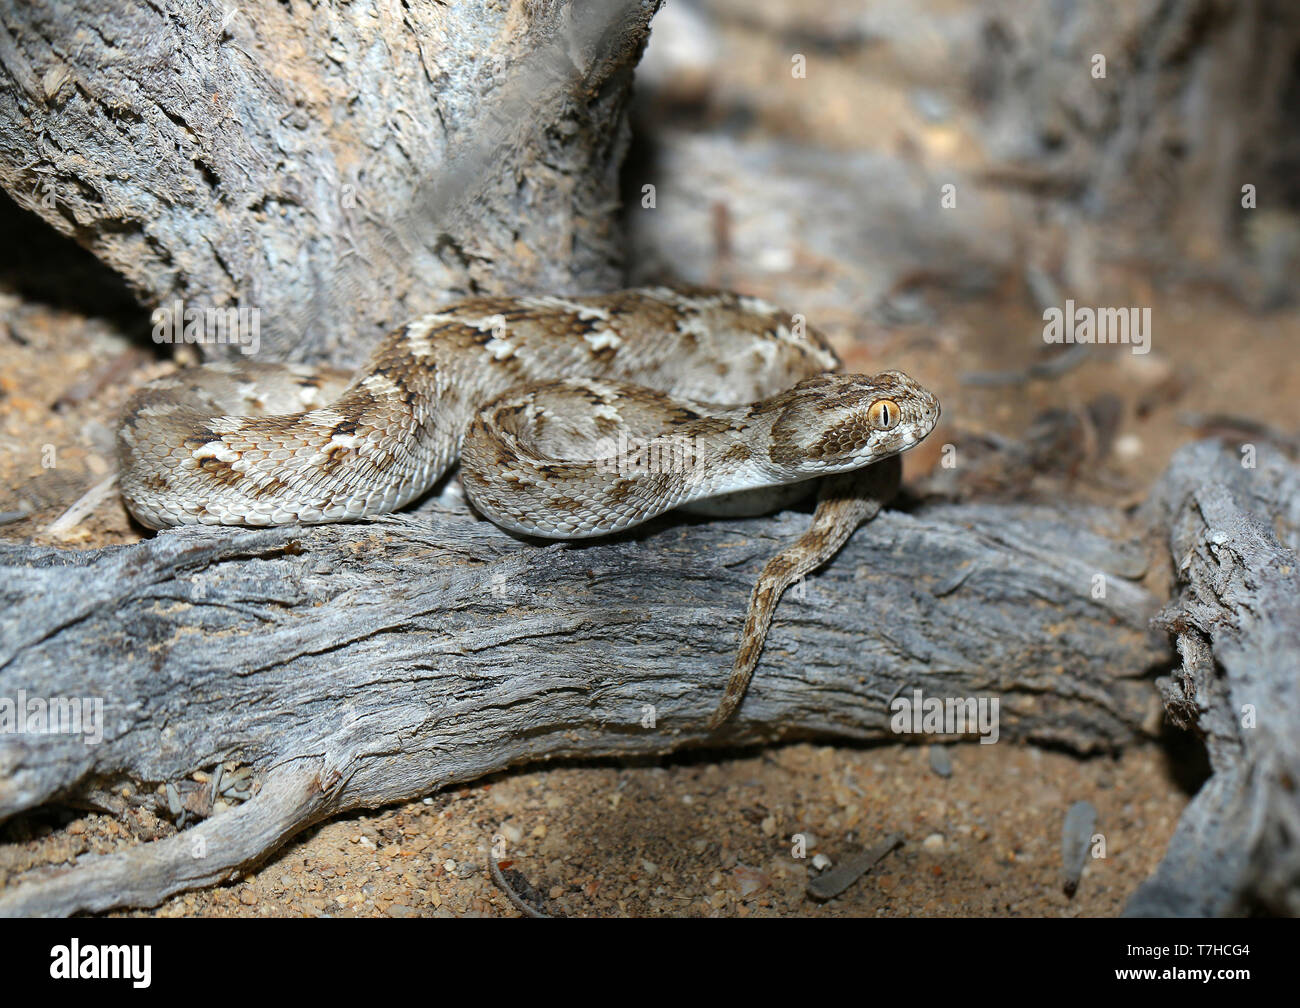 Sochurek’s saw-scaled viper (Echis carinatus sochureki) at Fins, Oman. Stock Photo